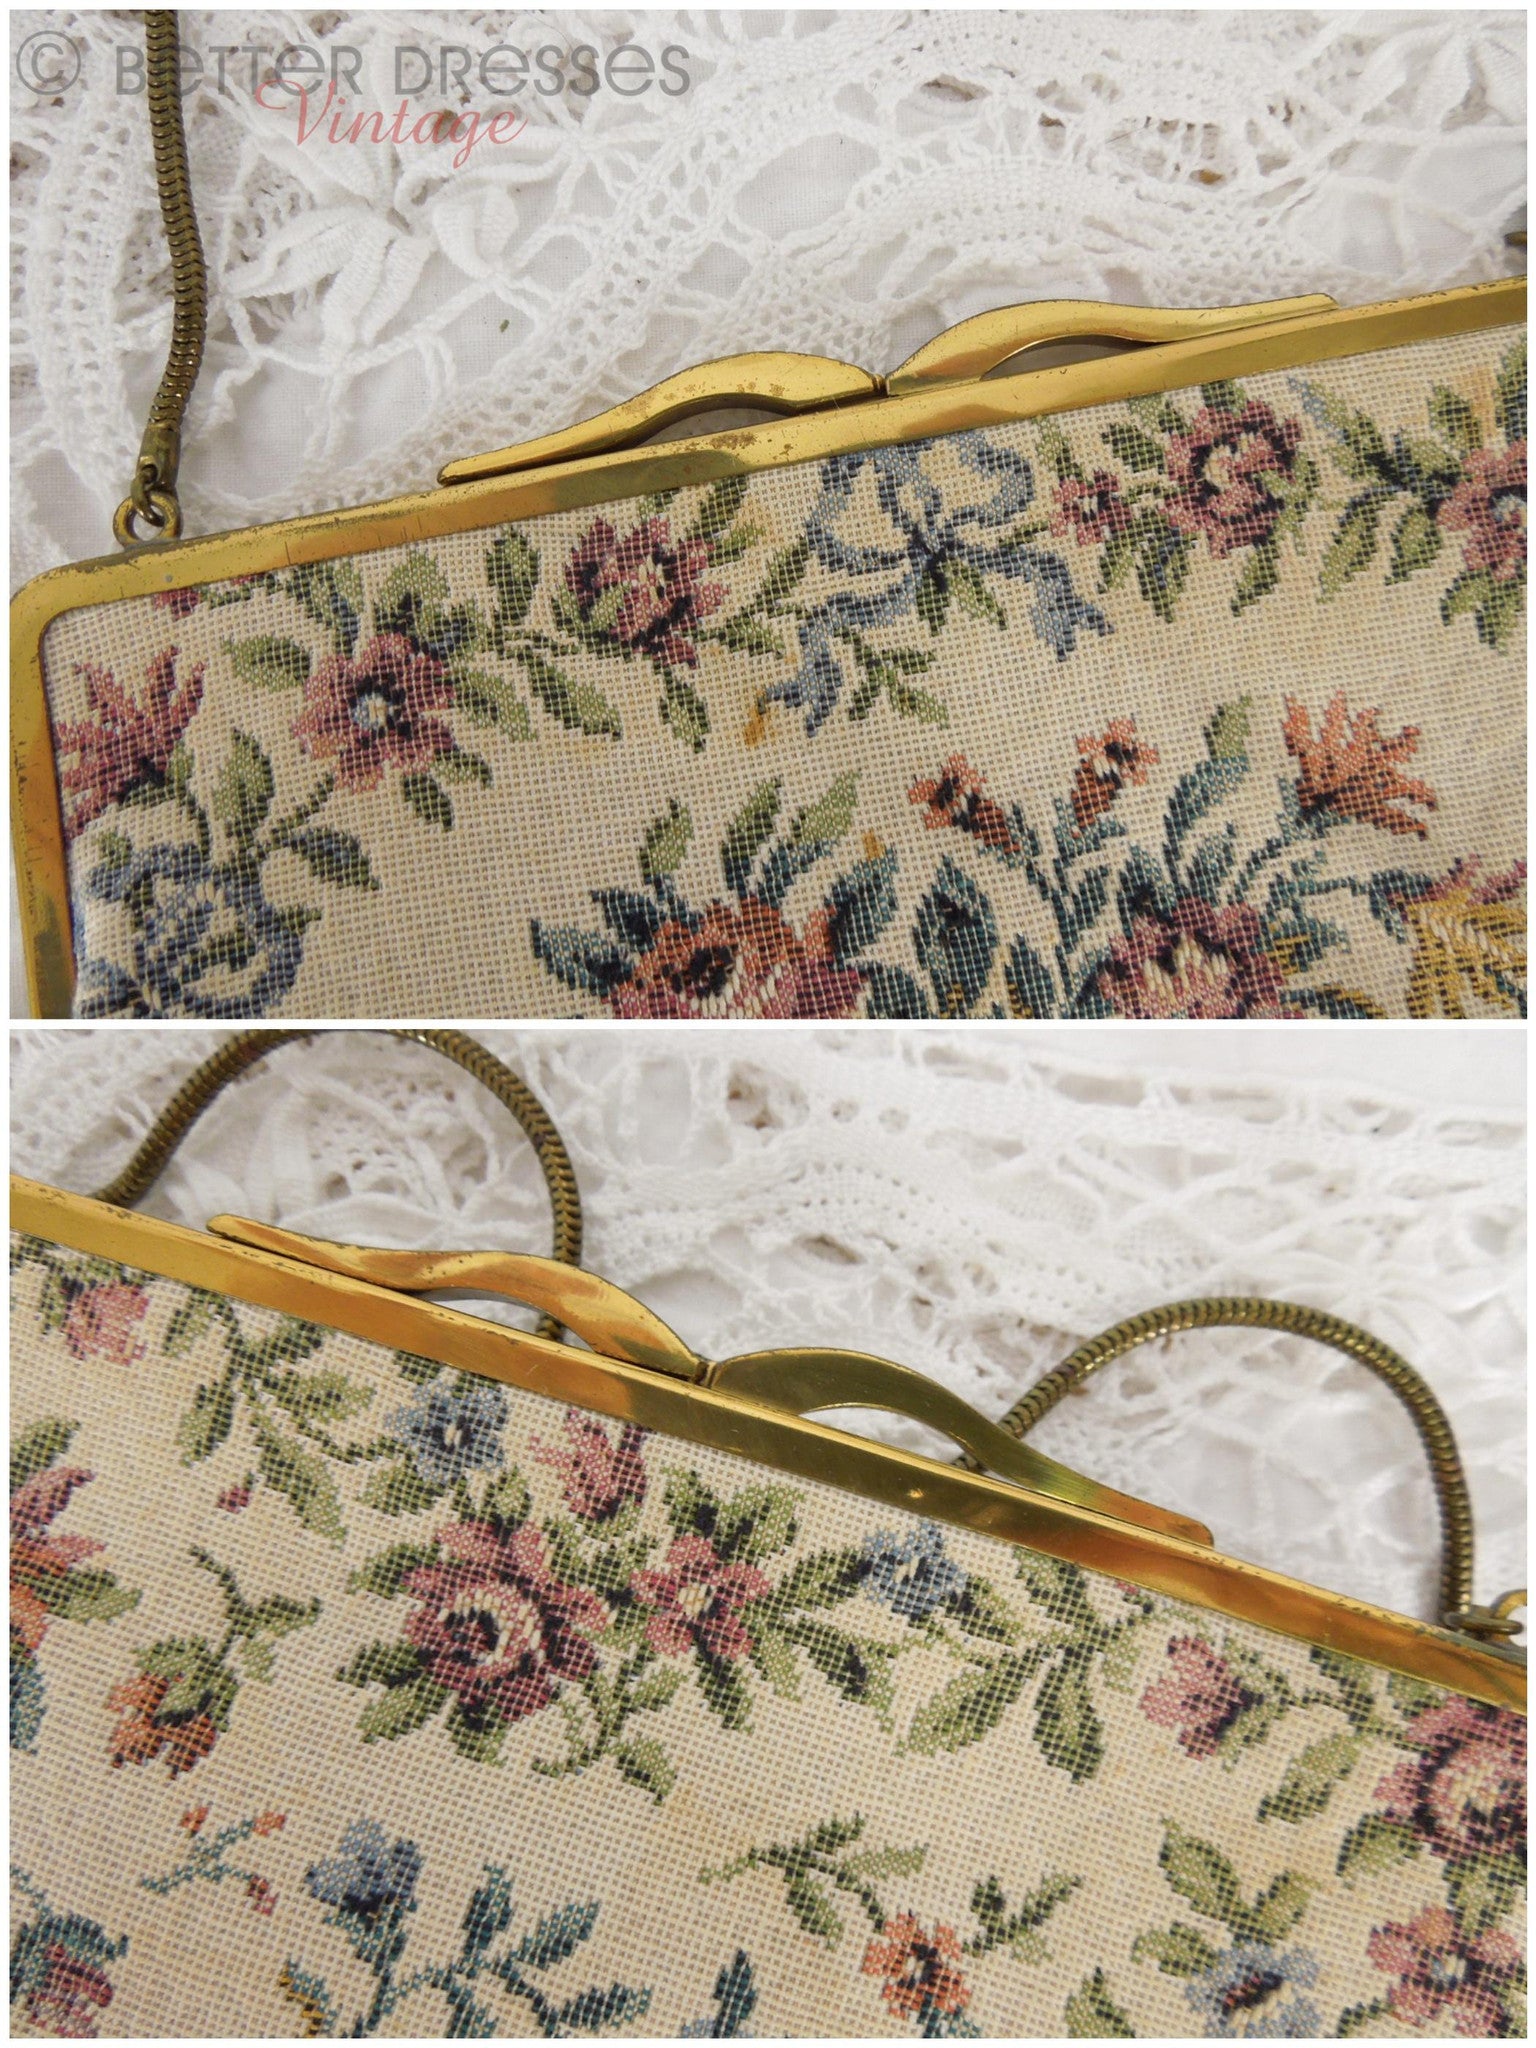 Vintage 1950s tapestry handbag in Antique Luggage & Bags